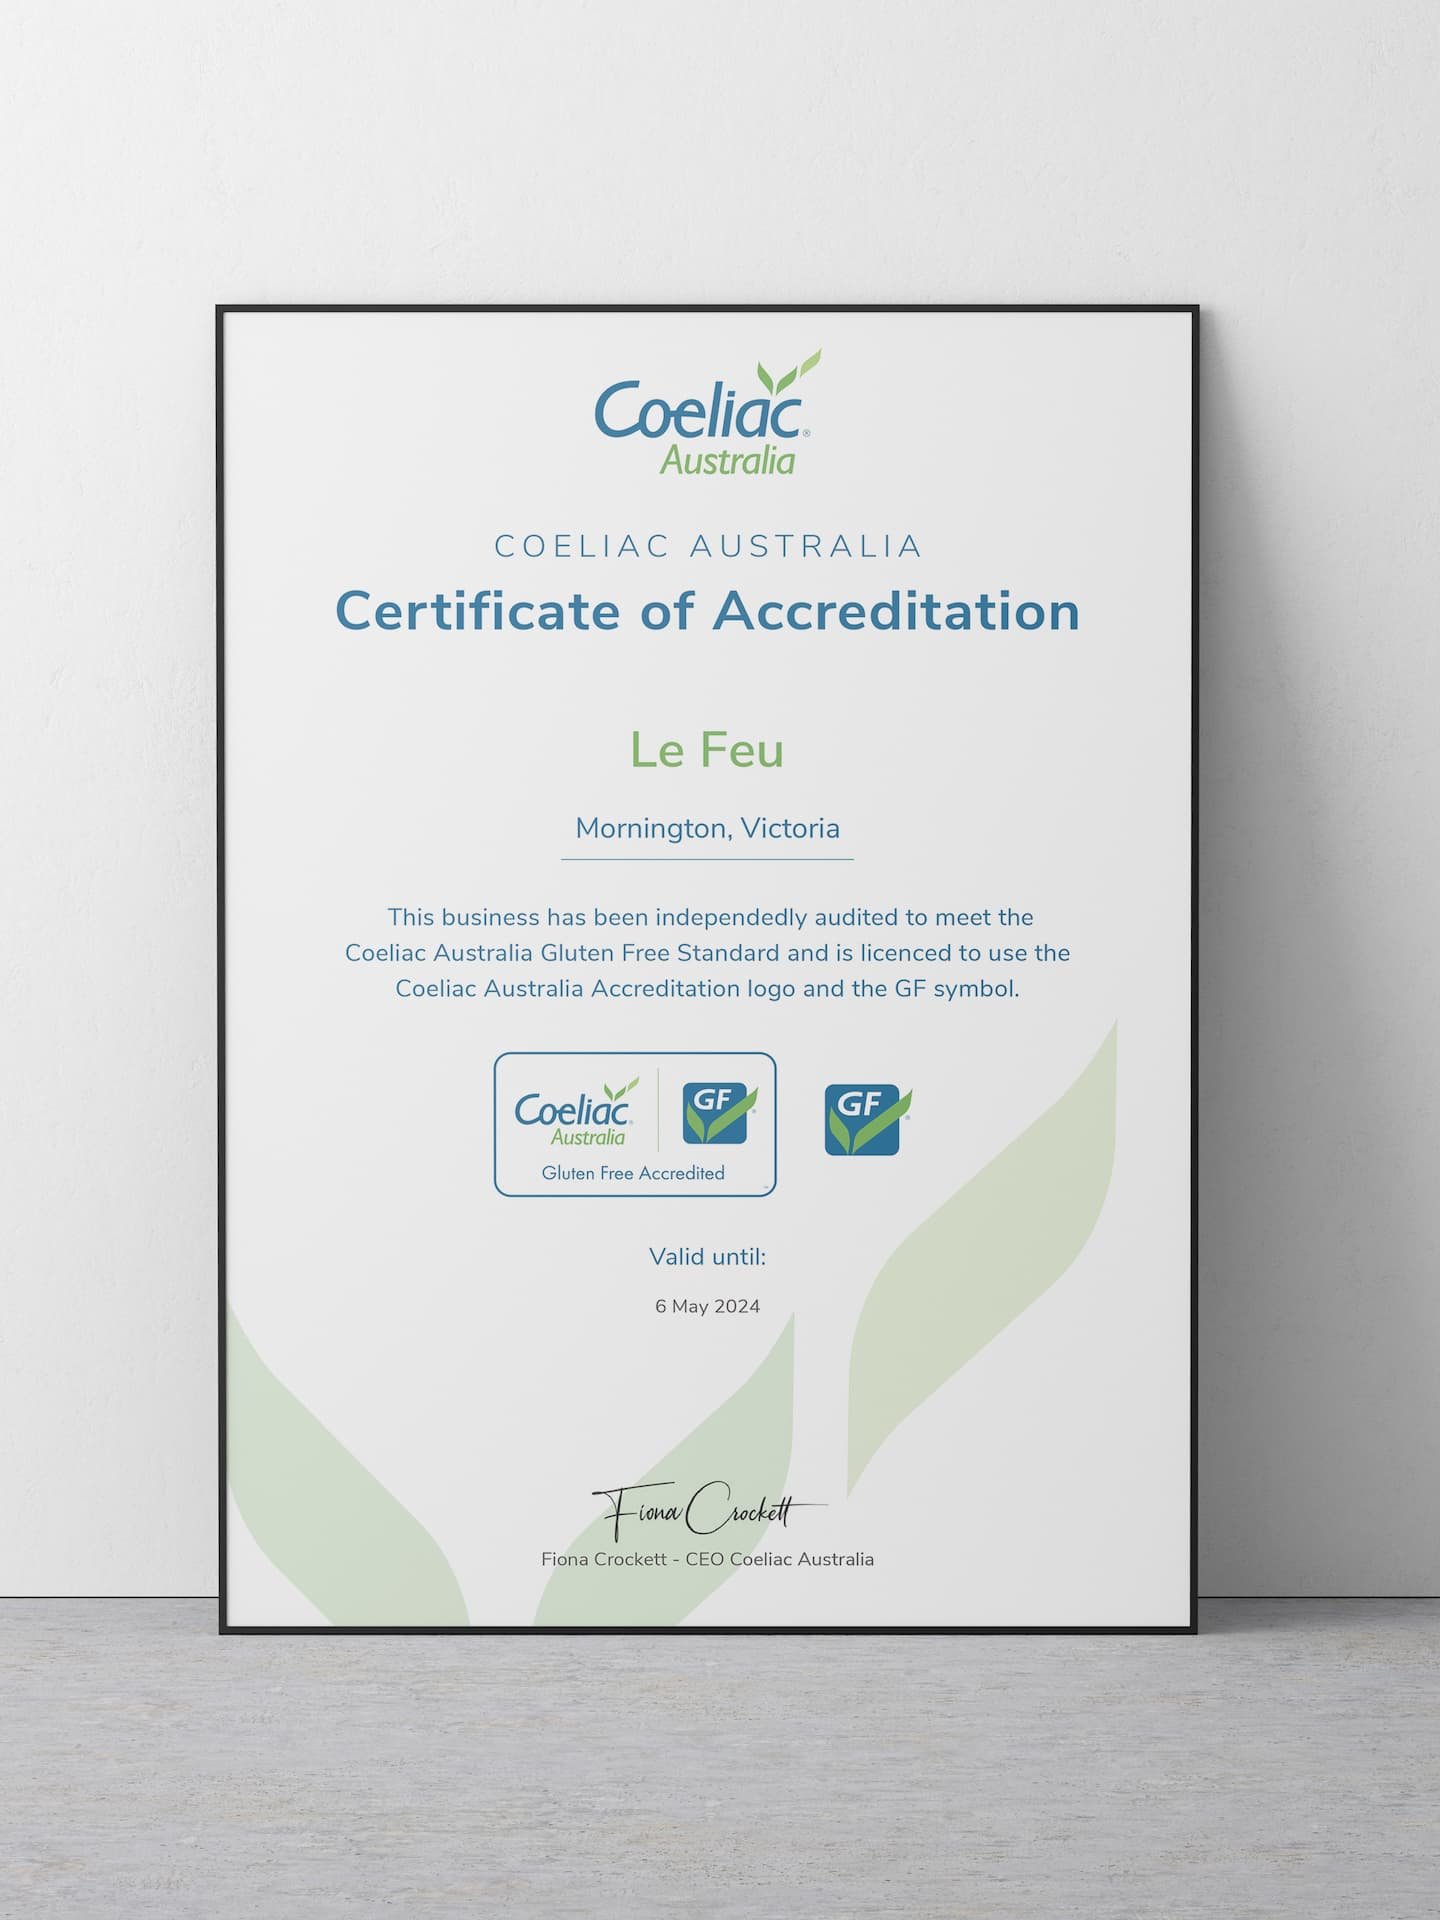 gluten free coeliac australia certificate for Le Feu Mornington.jpg